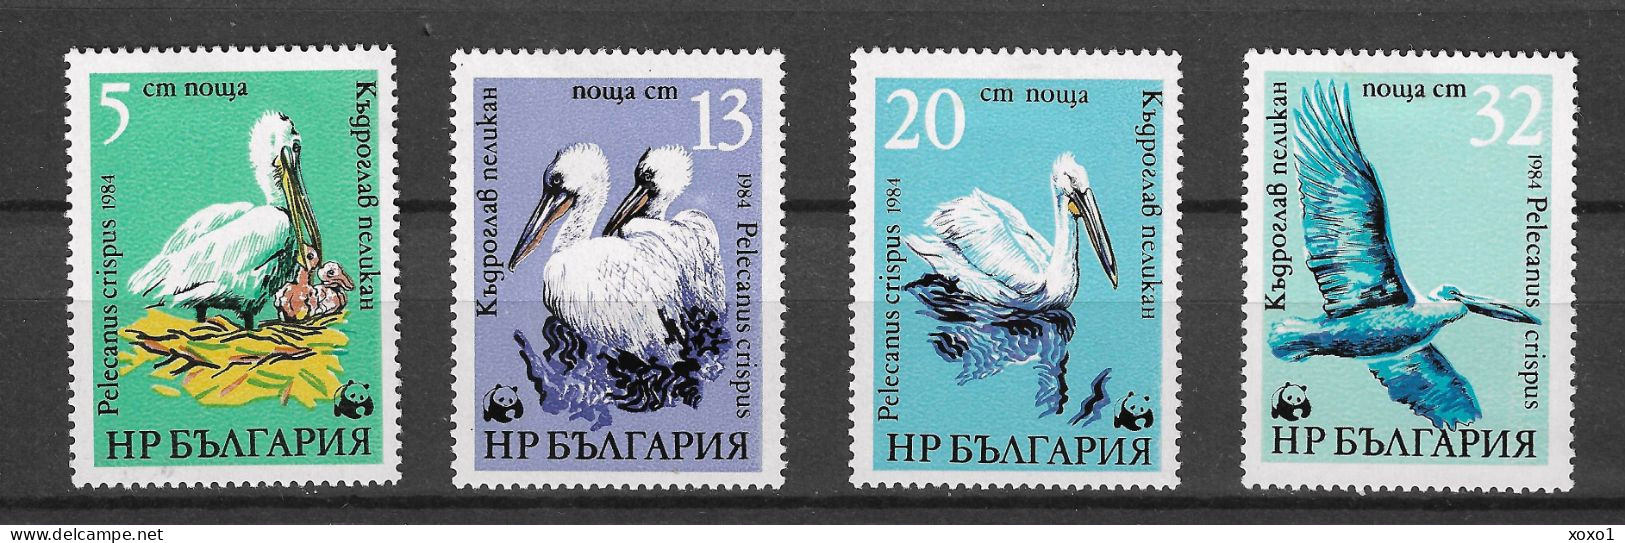 Bulgaria 1984 MiNr. 3303 - 3306 Bulgarien Birds Dalmatian Pelicans WWF 4v MLH * 6.50 € - Pellicani